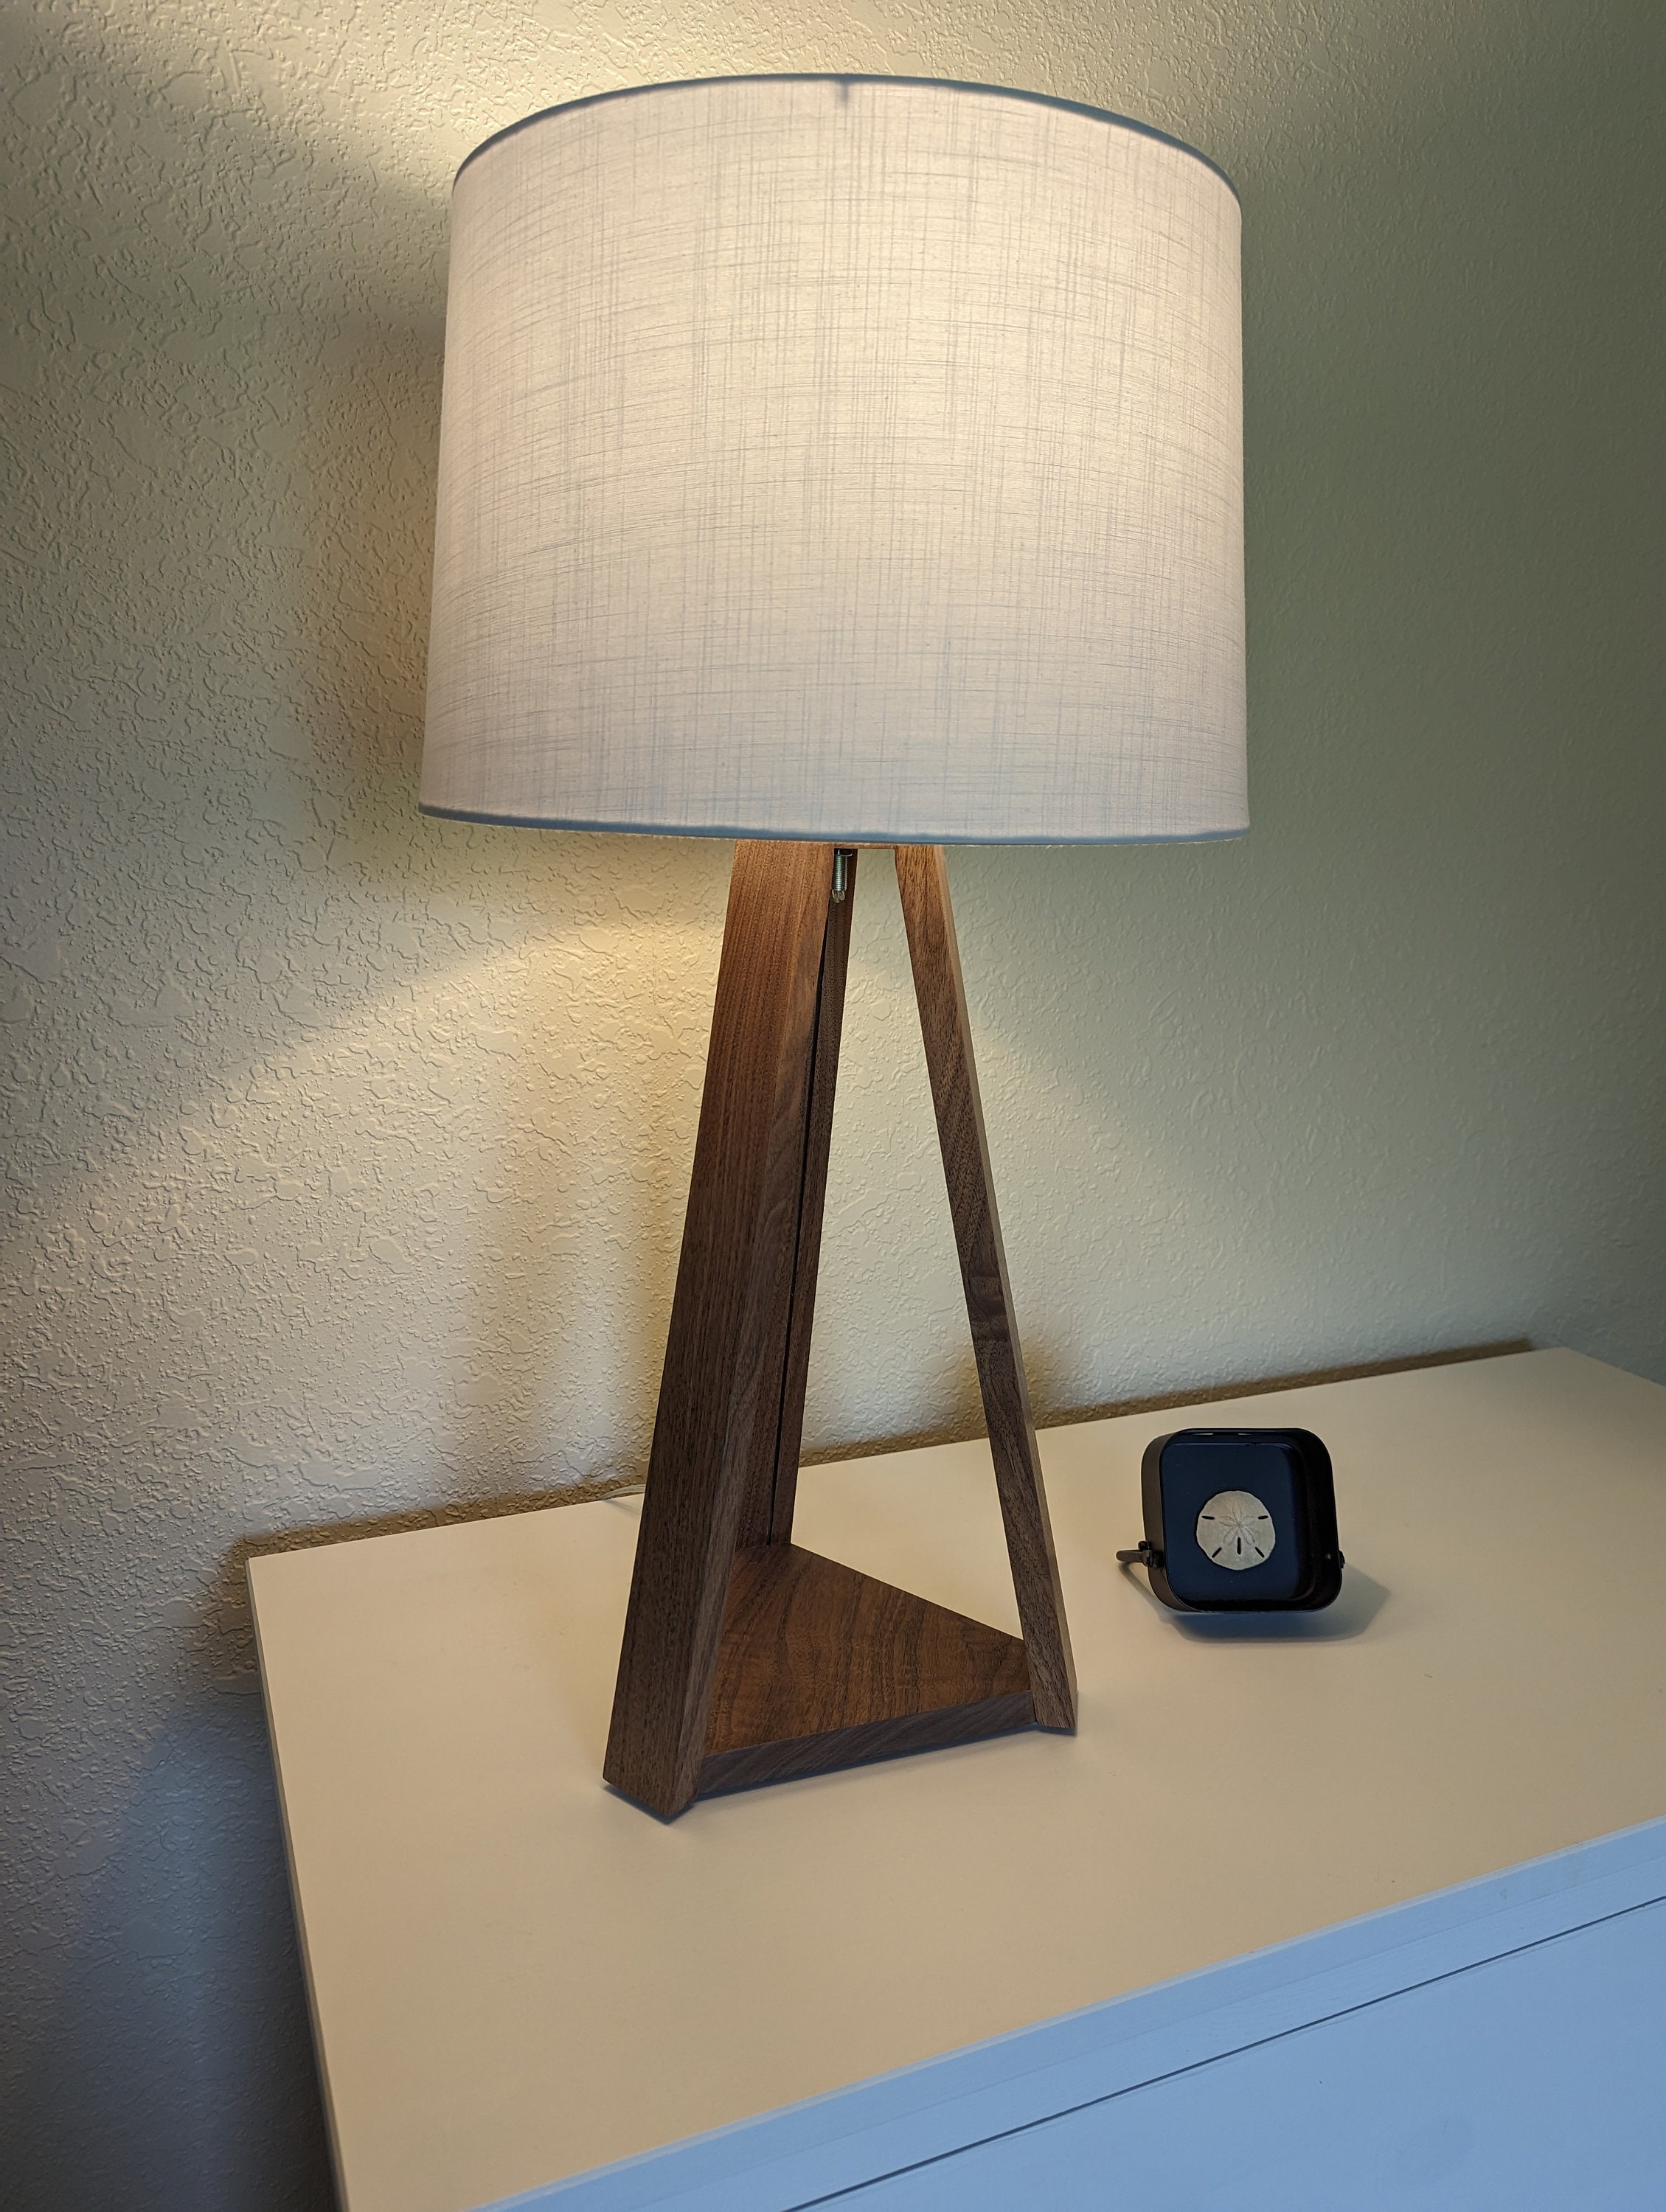 Hampton Bay Woodbine 23.5 in. Walnut Wood Table Lamp with LED Bulb